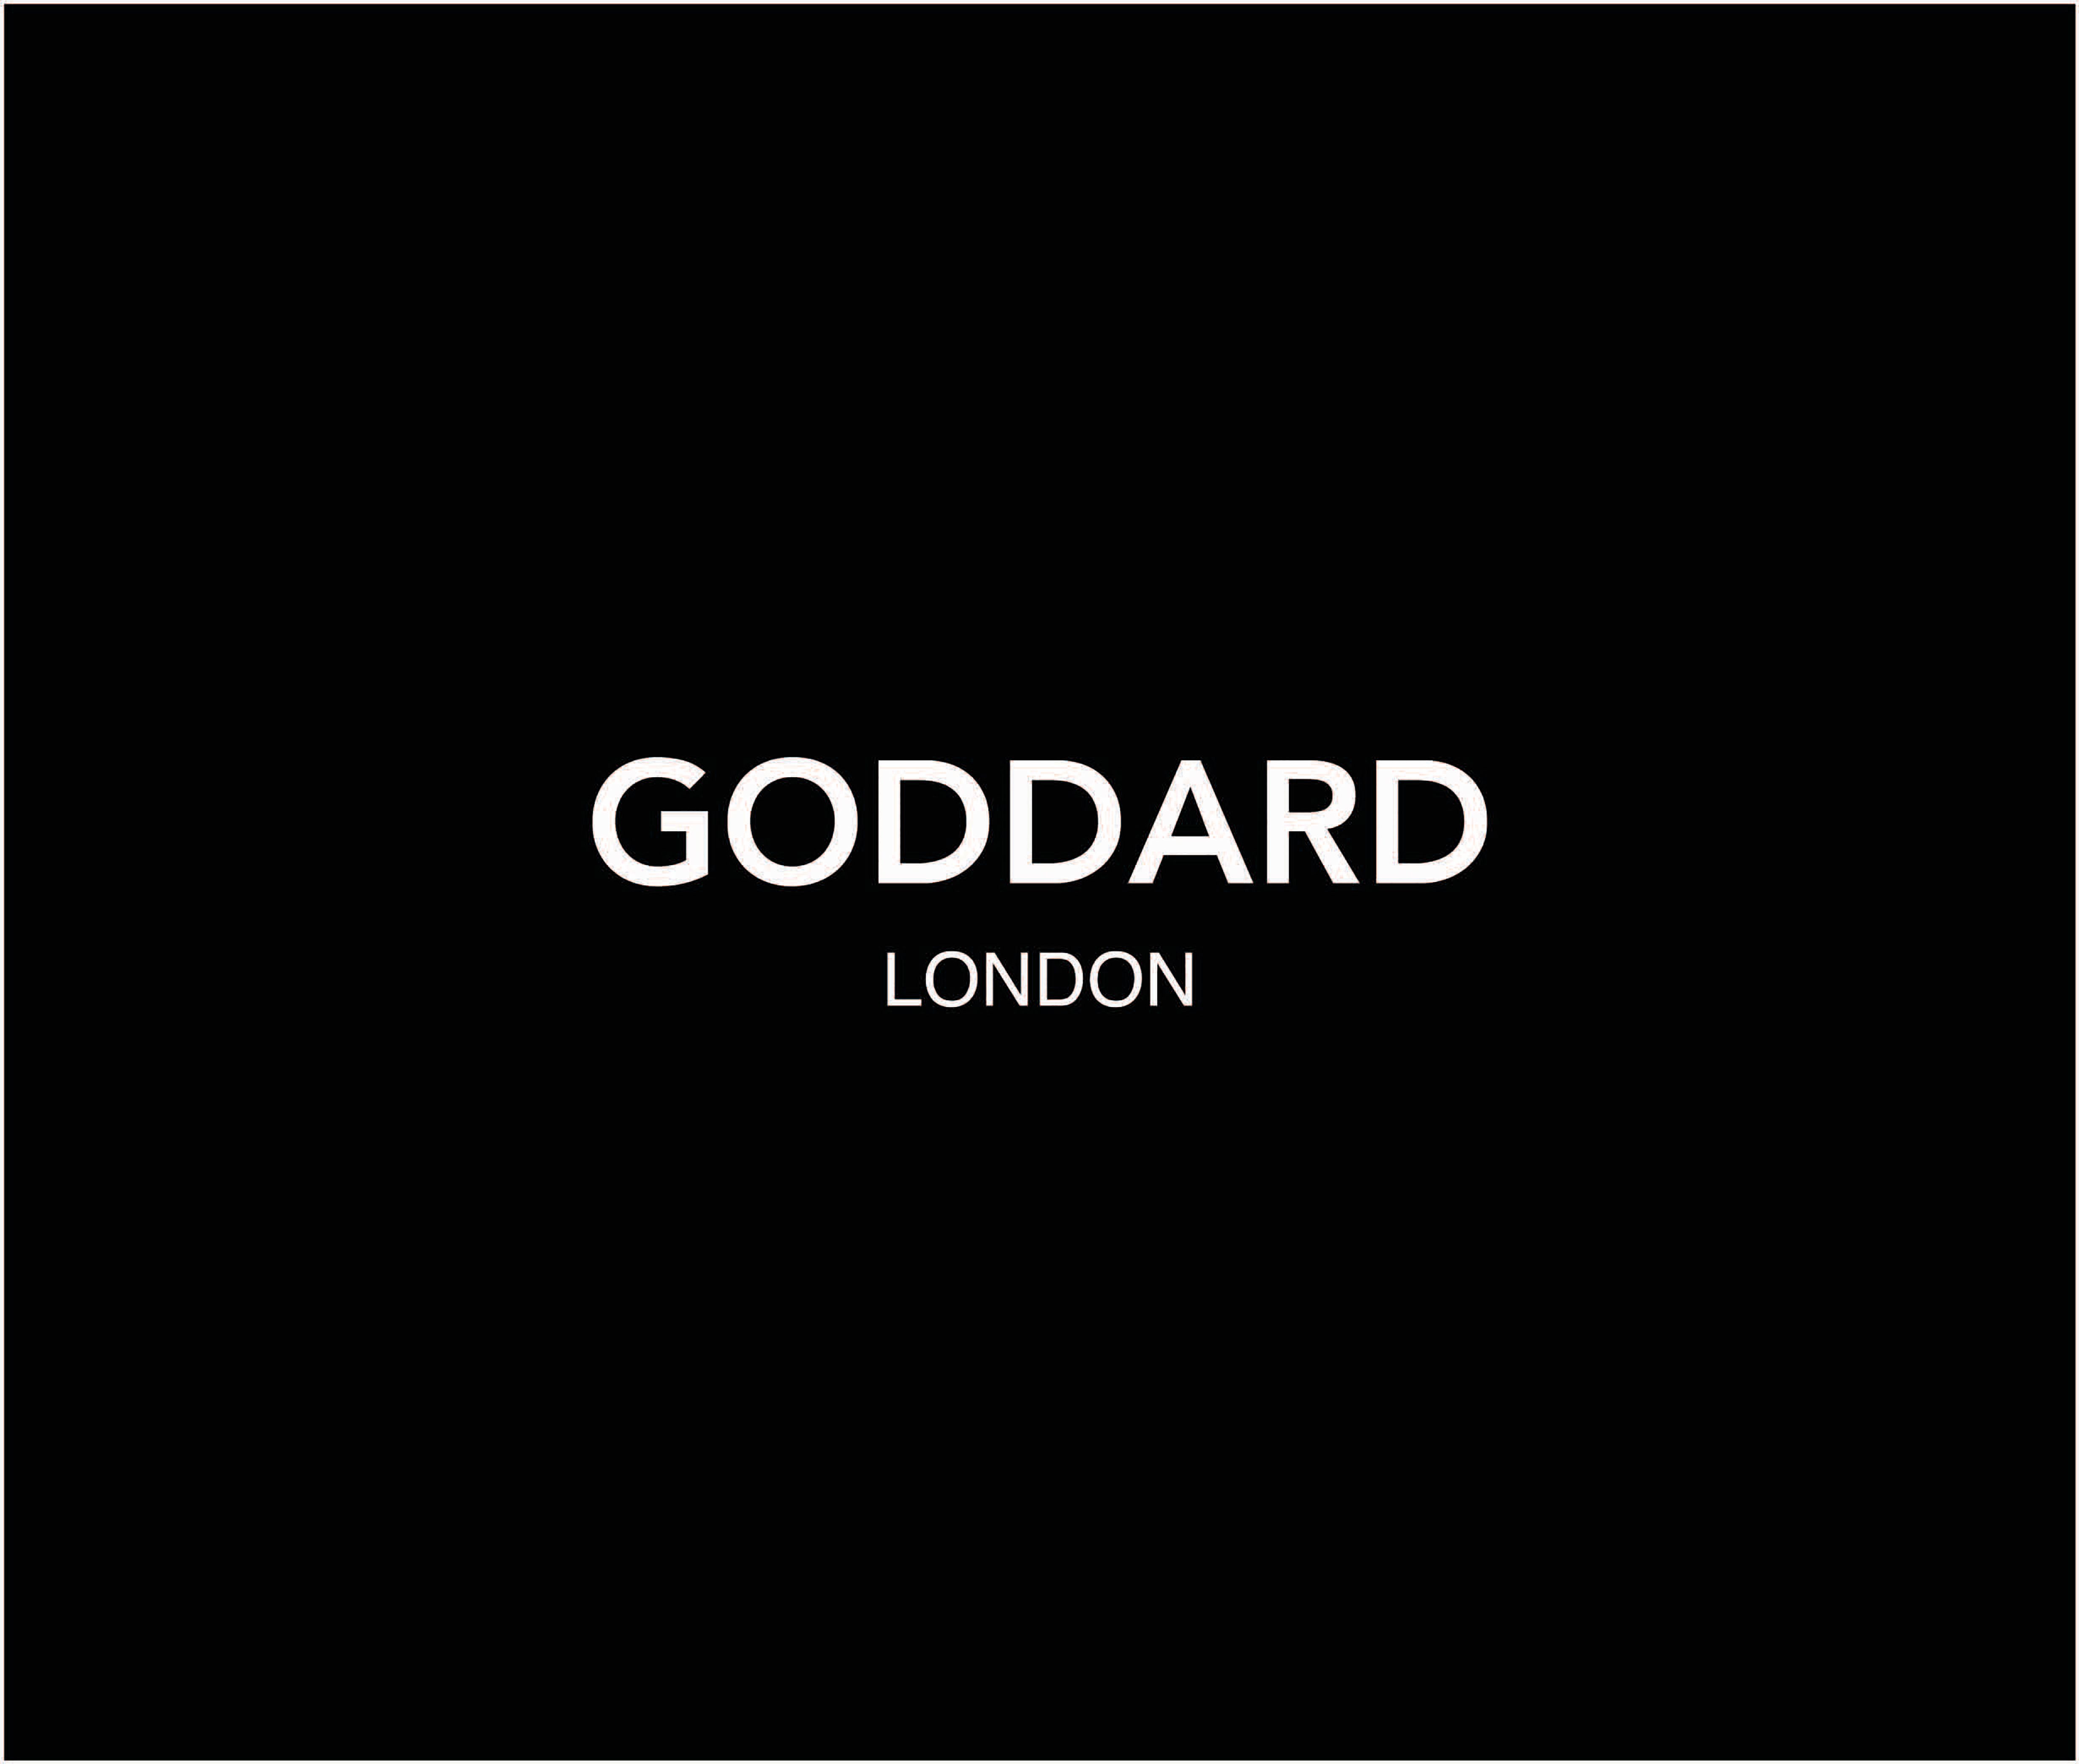 Goddard Gallery